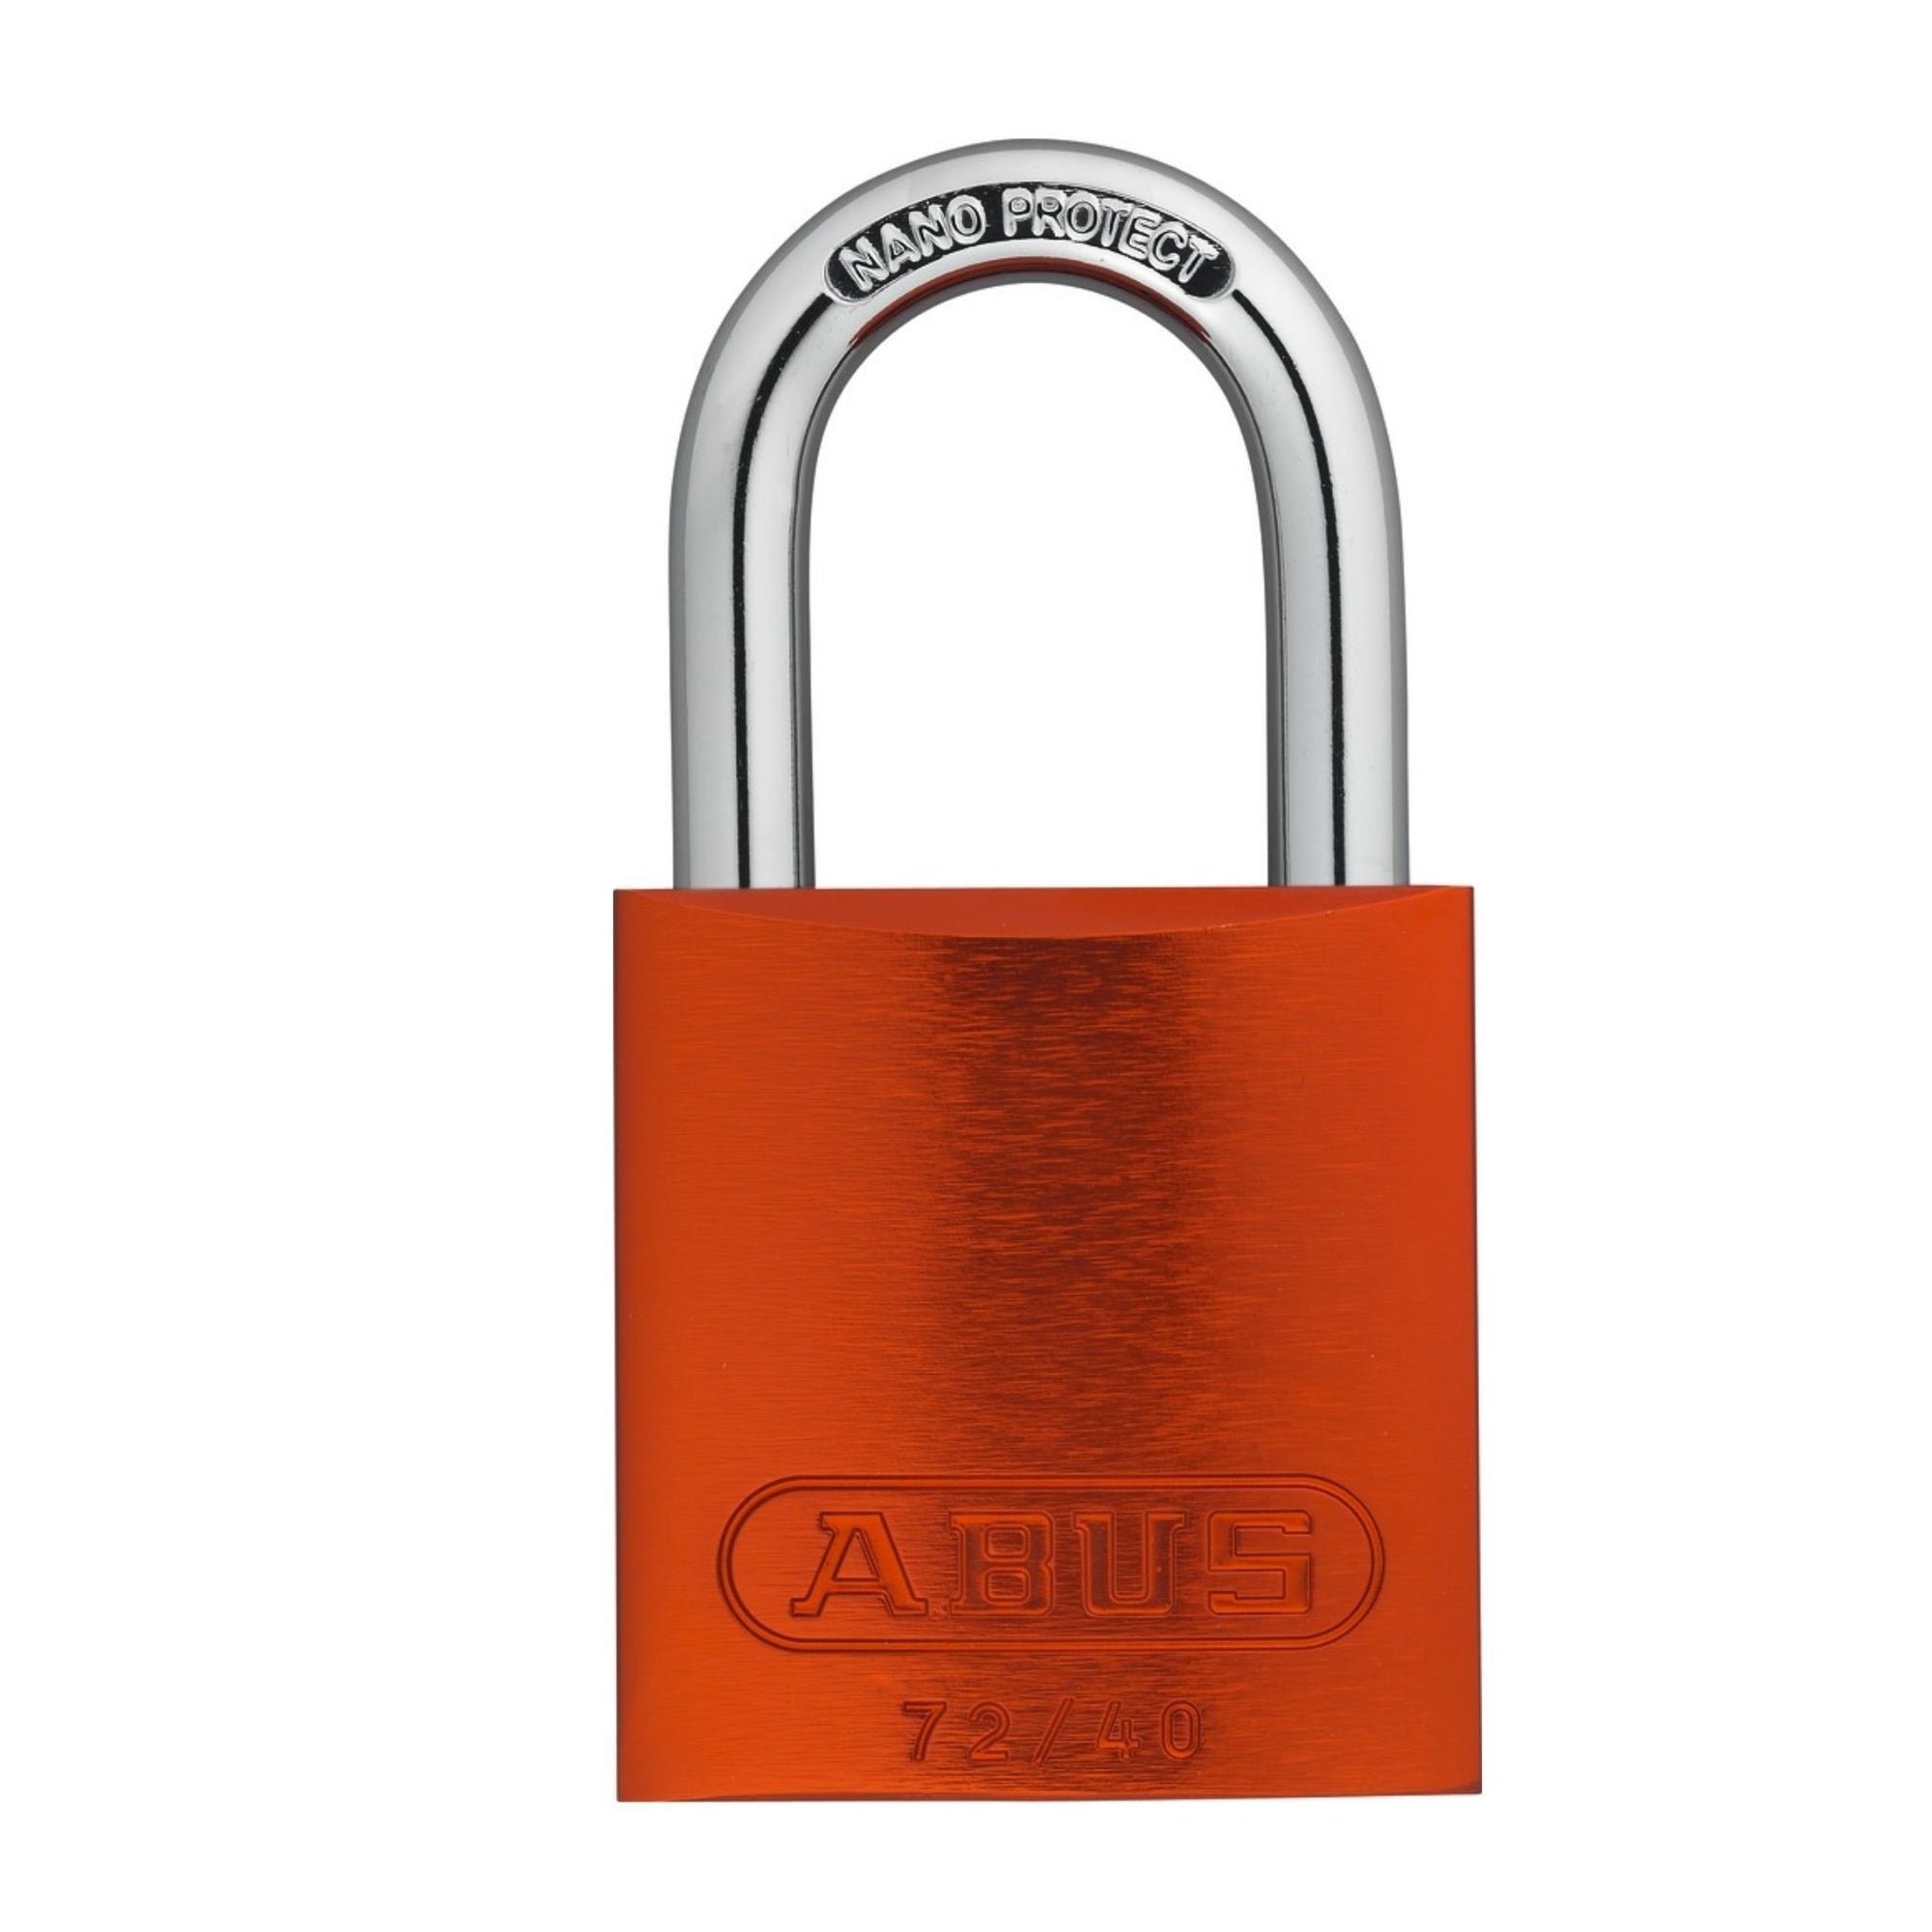 Abus 72/40 KA TT00036 Orange Titalium Safety Padlock with 1-Inch Shackle, Keyed Alike to Match Existing Key Number KATT00036 - The Lock Source 